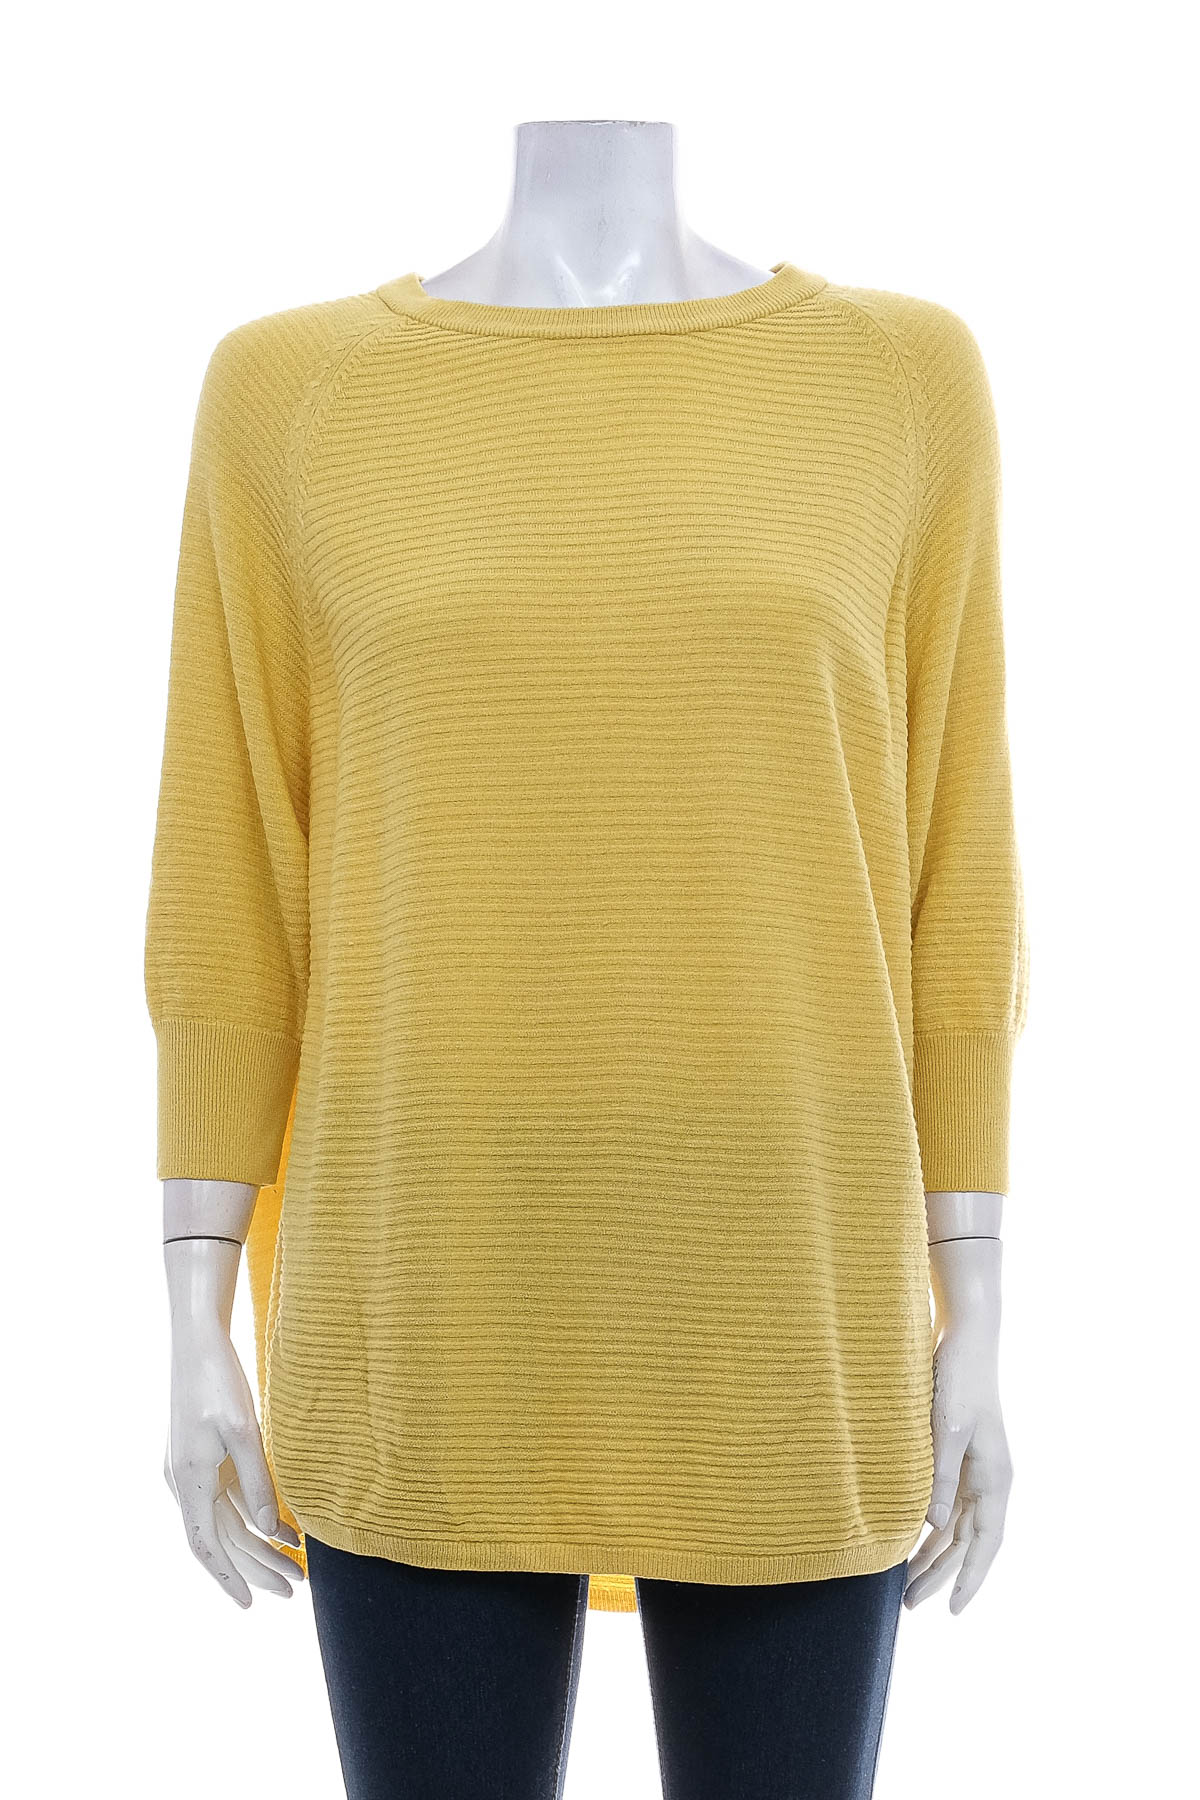 Women's sweater - Jacqueline de Yong - 0